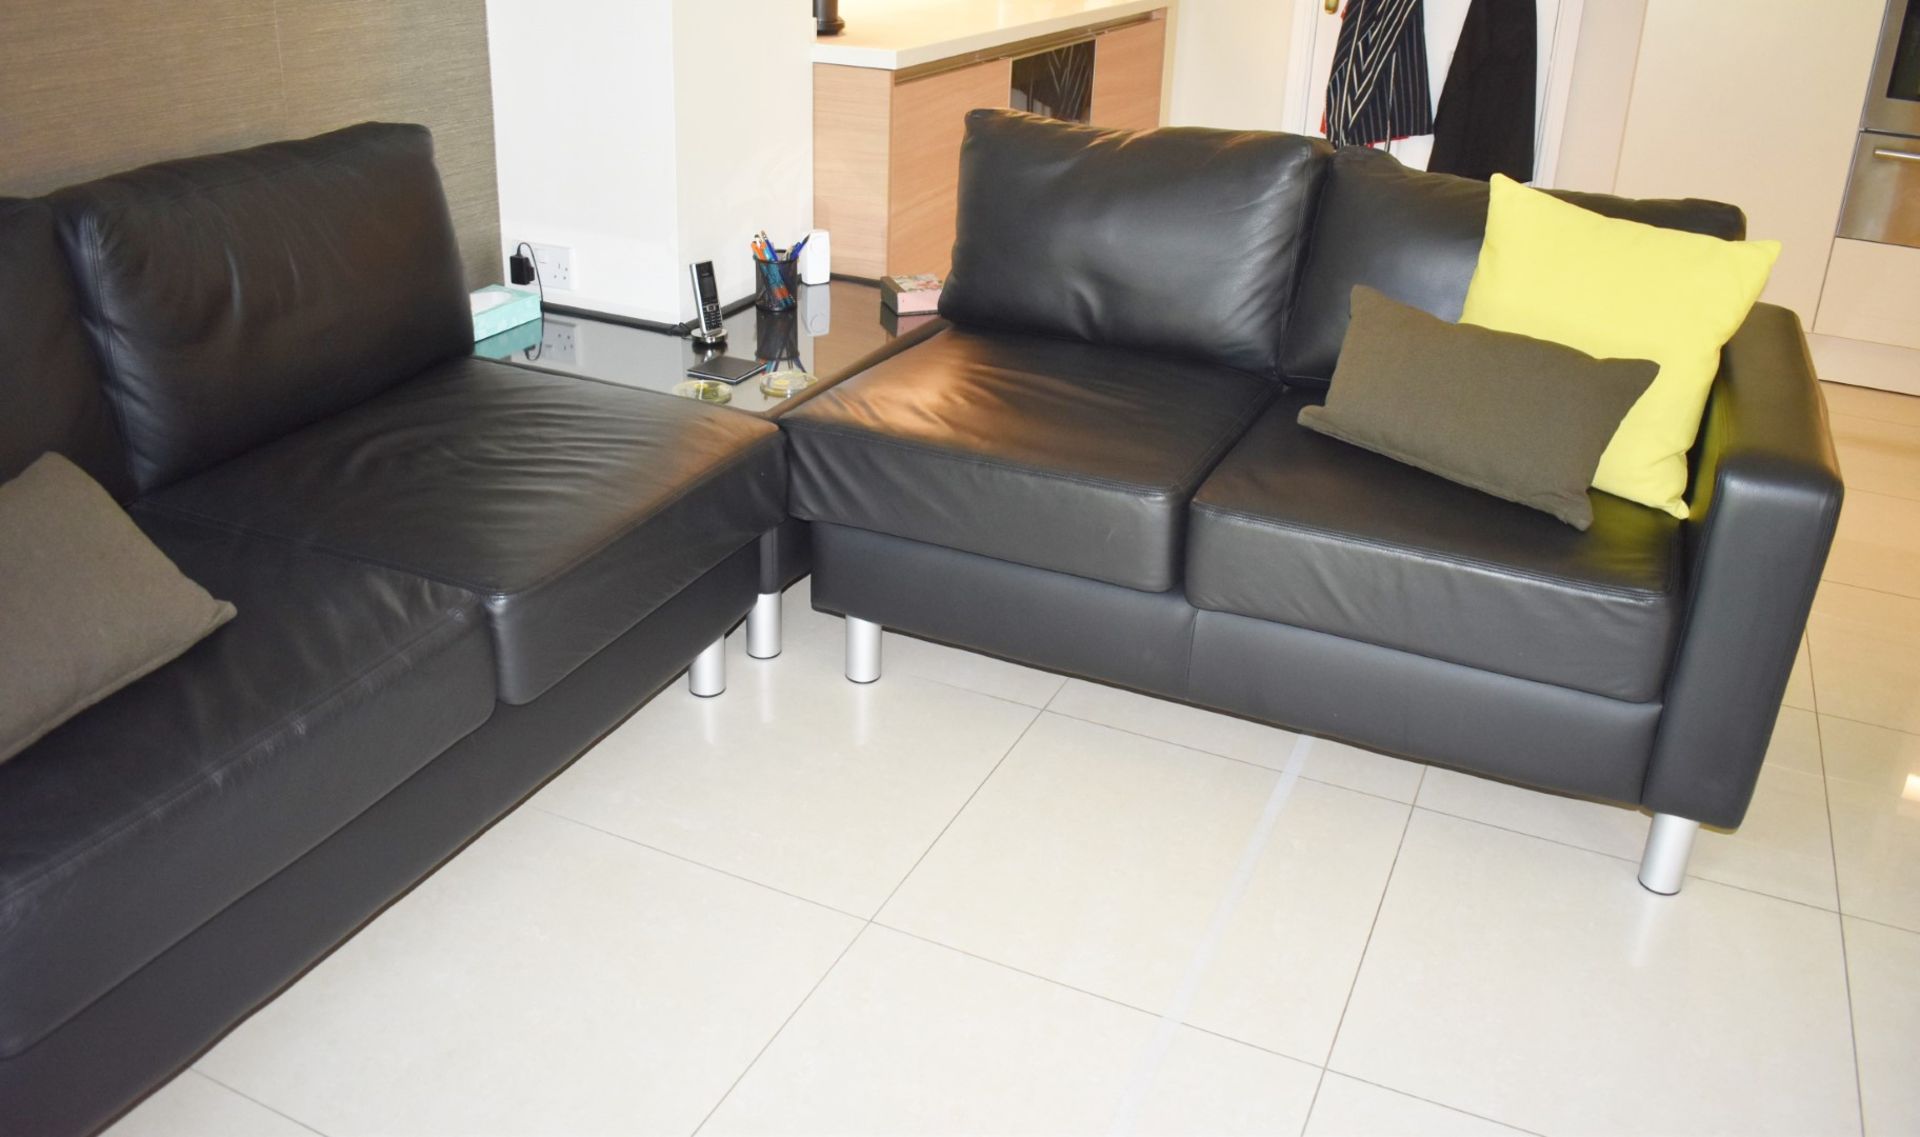 1 x Saxon Bespoke Corner Sofa Upholstered in Genuine Black Leather - Three-Piece Contemporary Design - Image 7 of 14